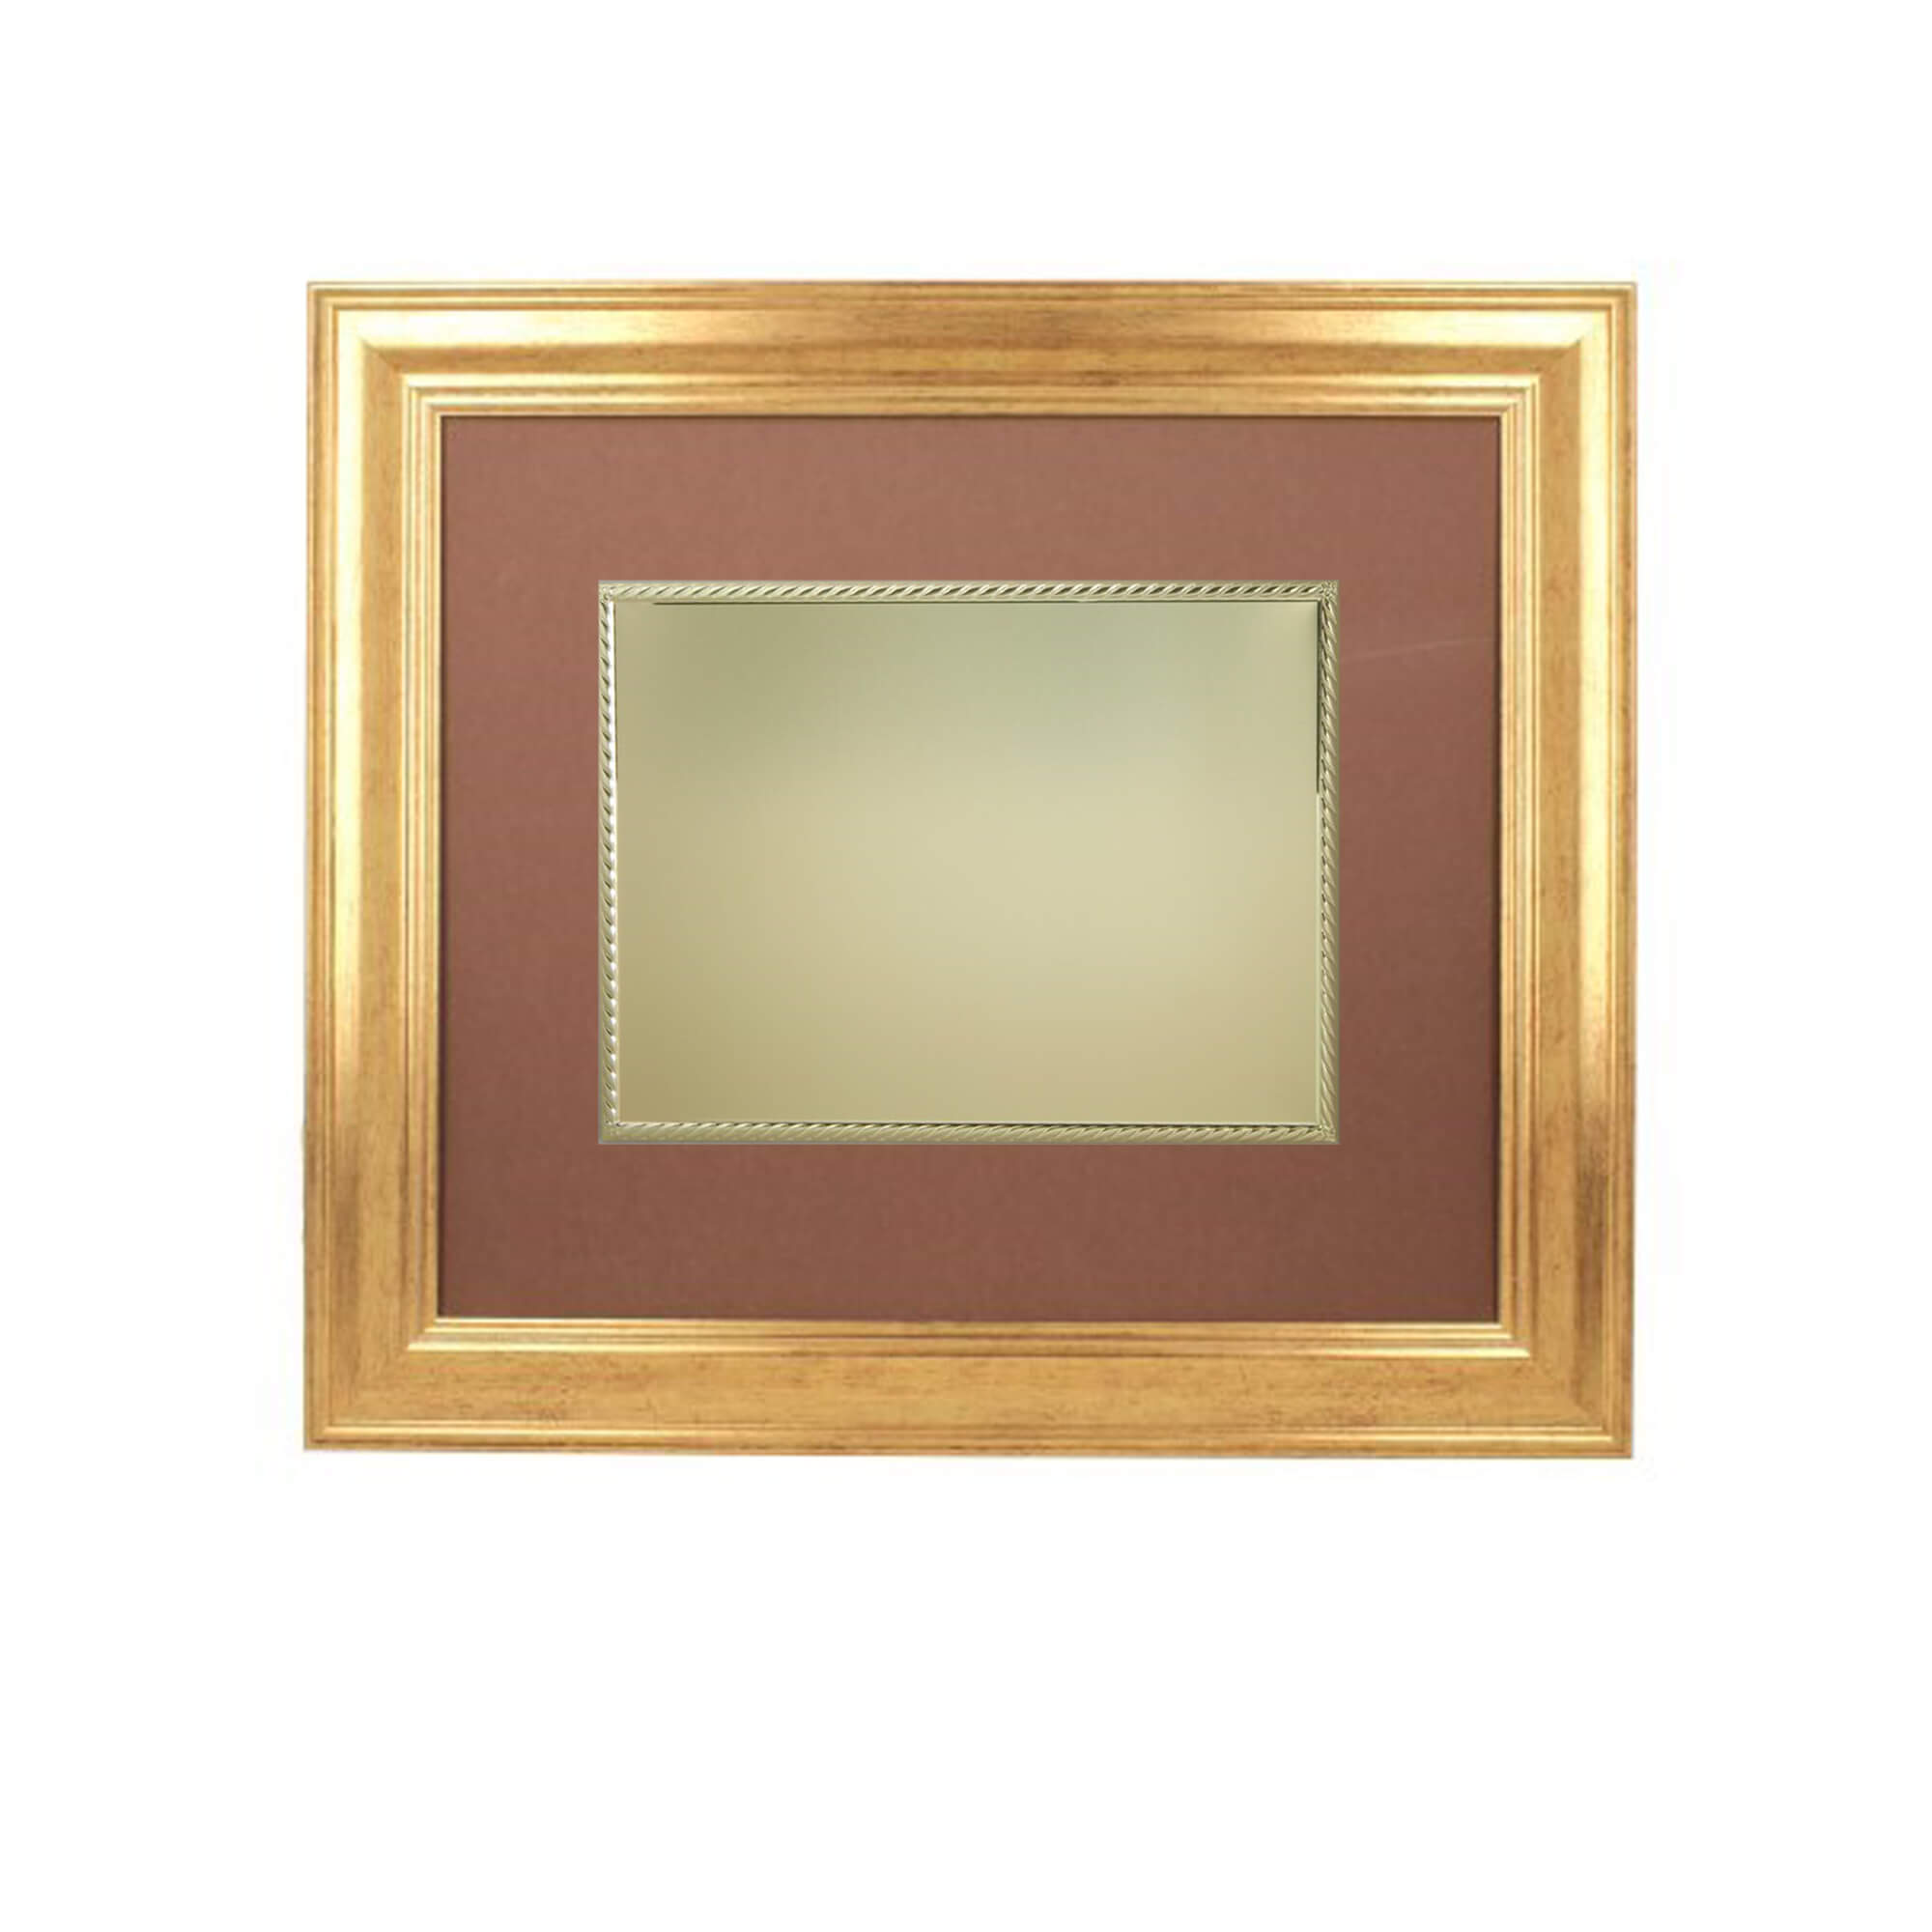 Diploma in Frame Golden V